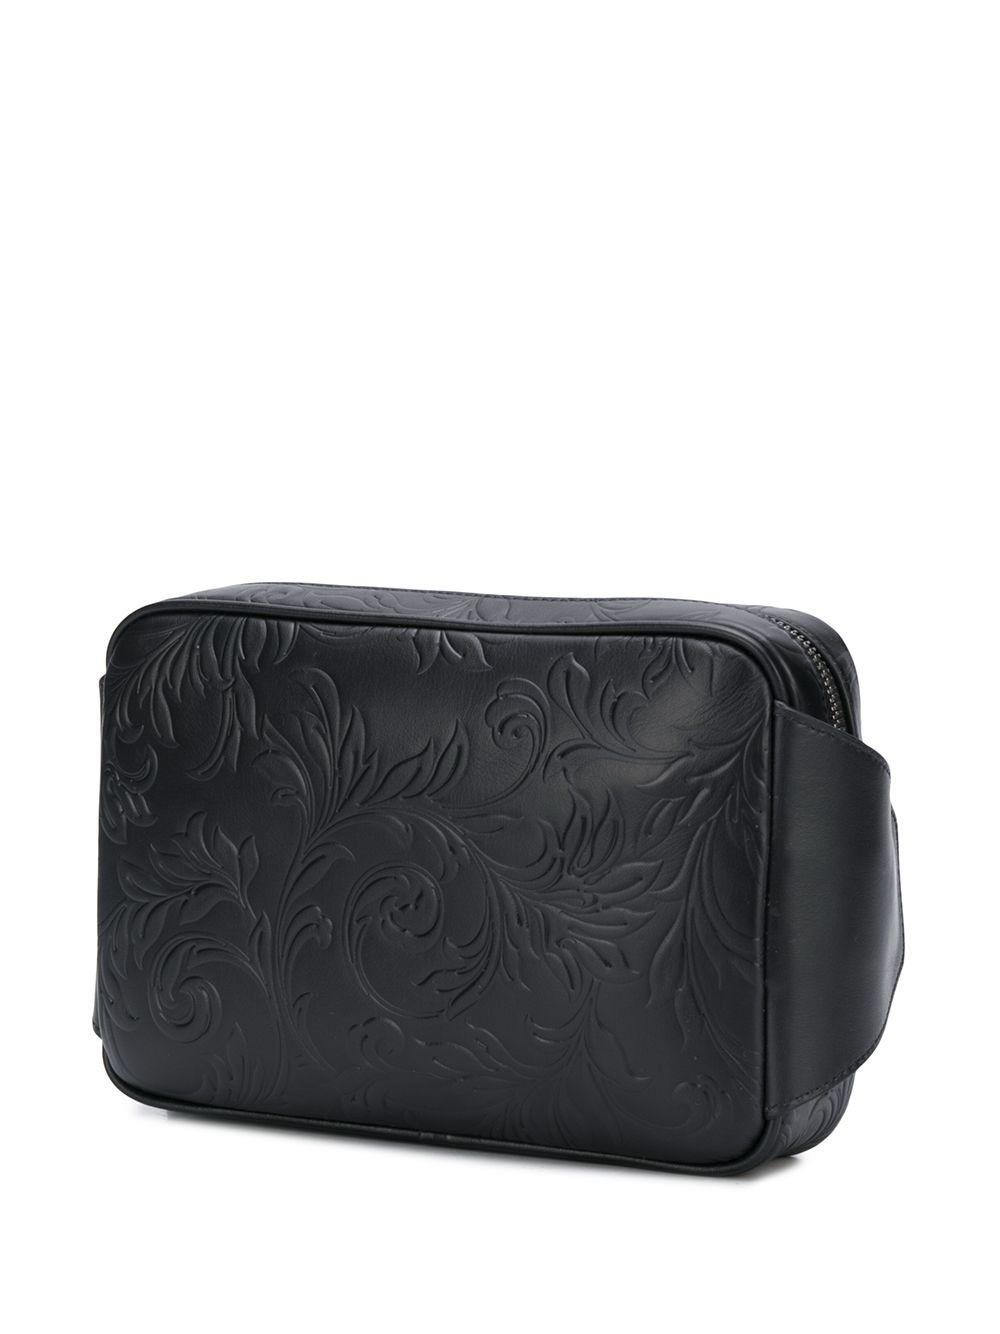 фото Versace поясная сумка с тиснением barocco